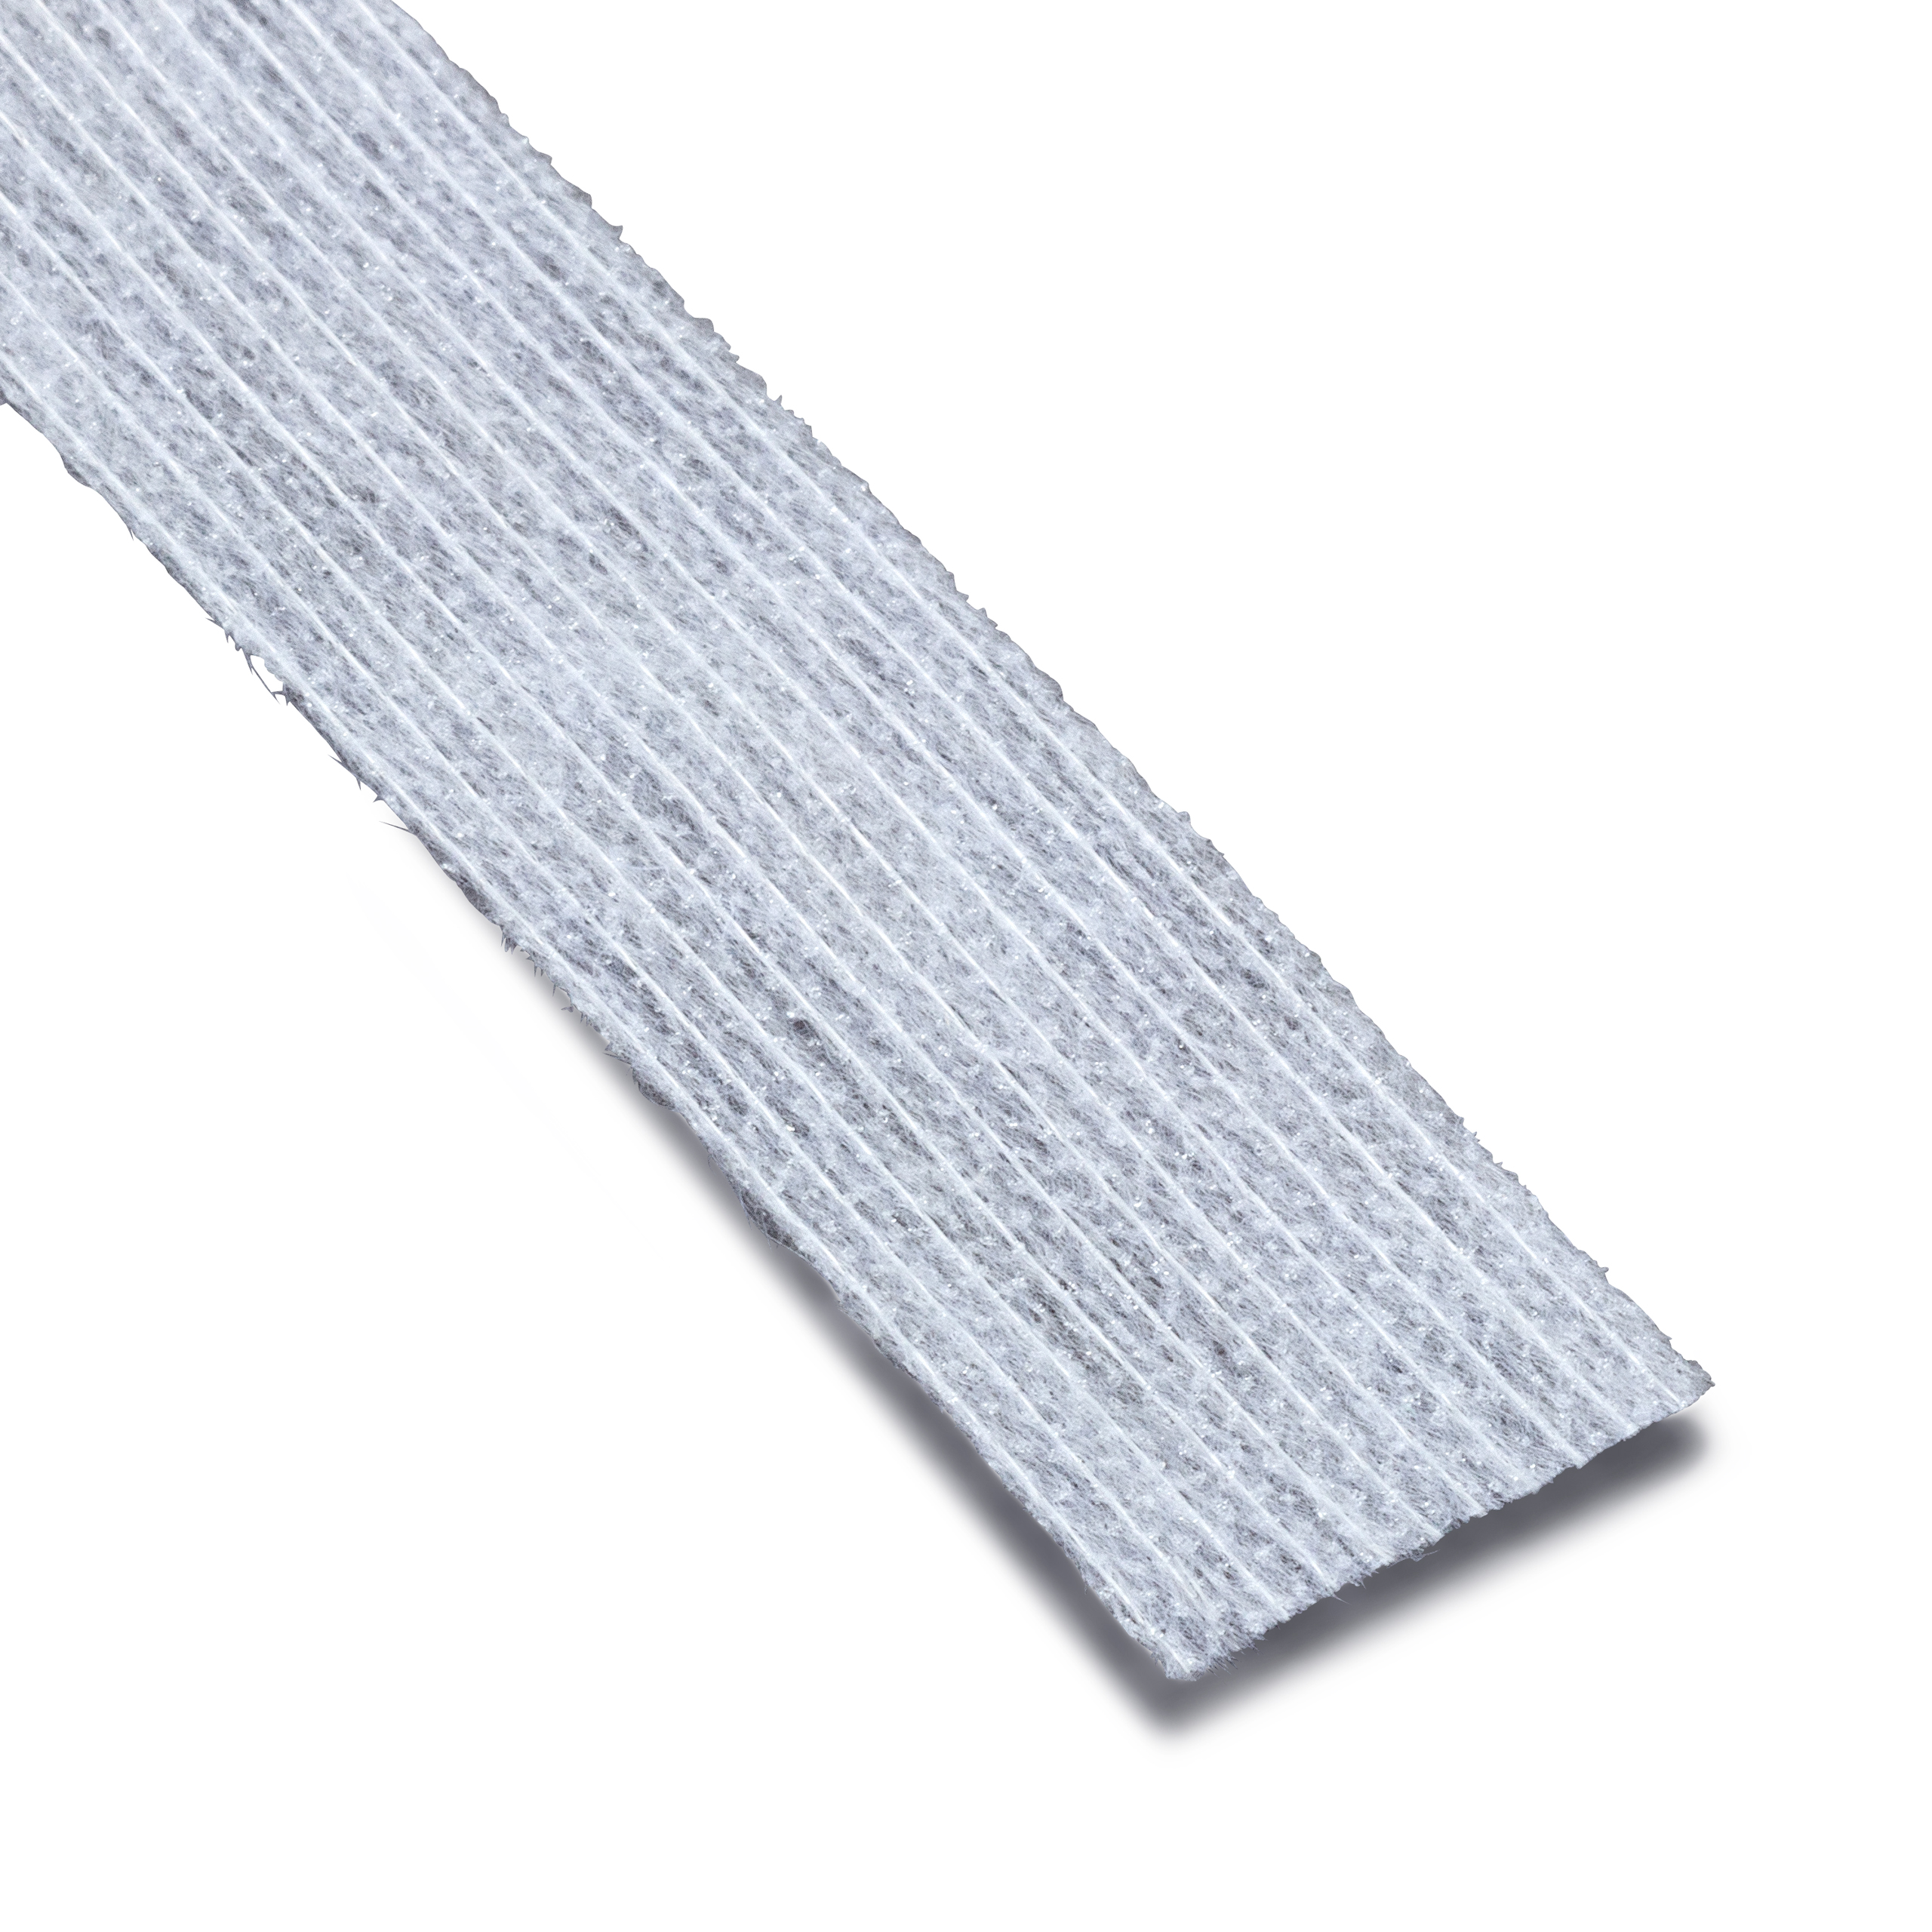 Vlies-Kantenband zum Aufbügeln 20 mm weiß, 10 m